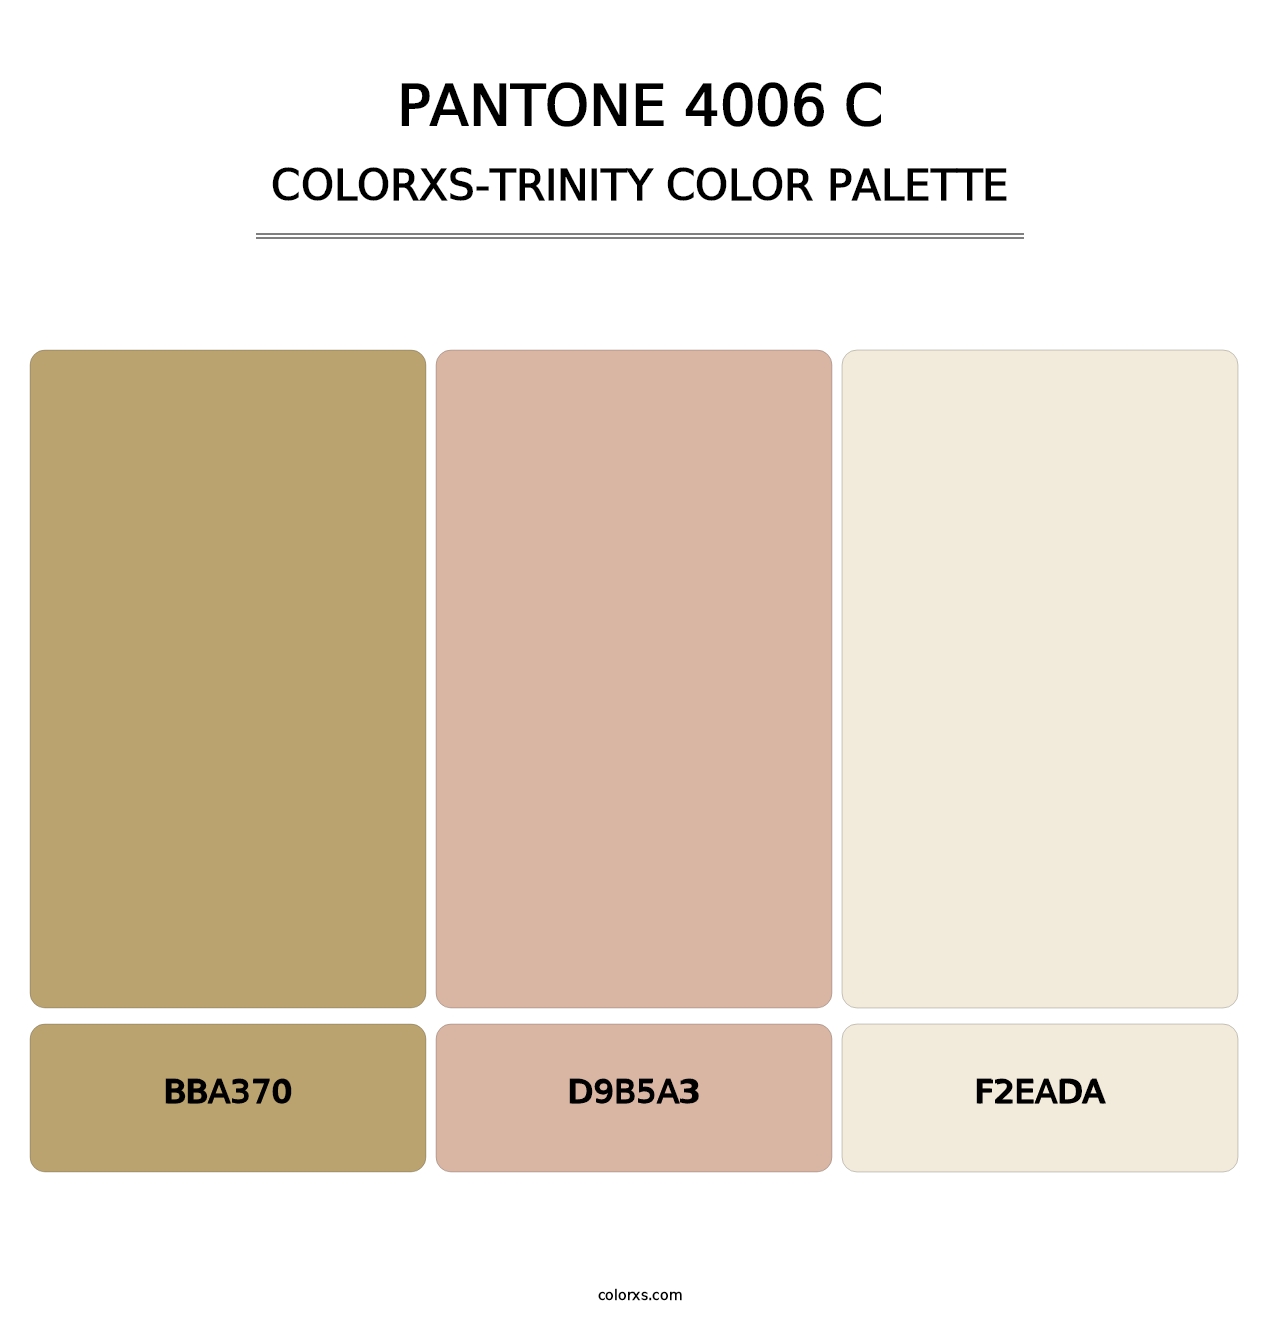 PANTONE 4006 C - Colorxs Trinity Palette